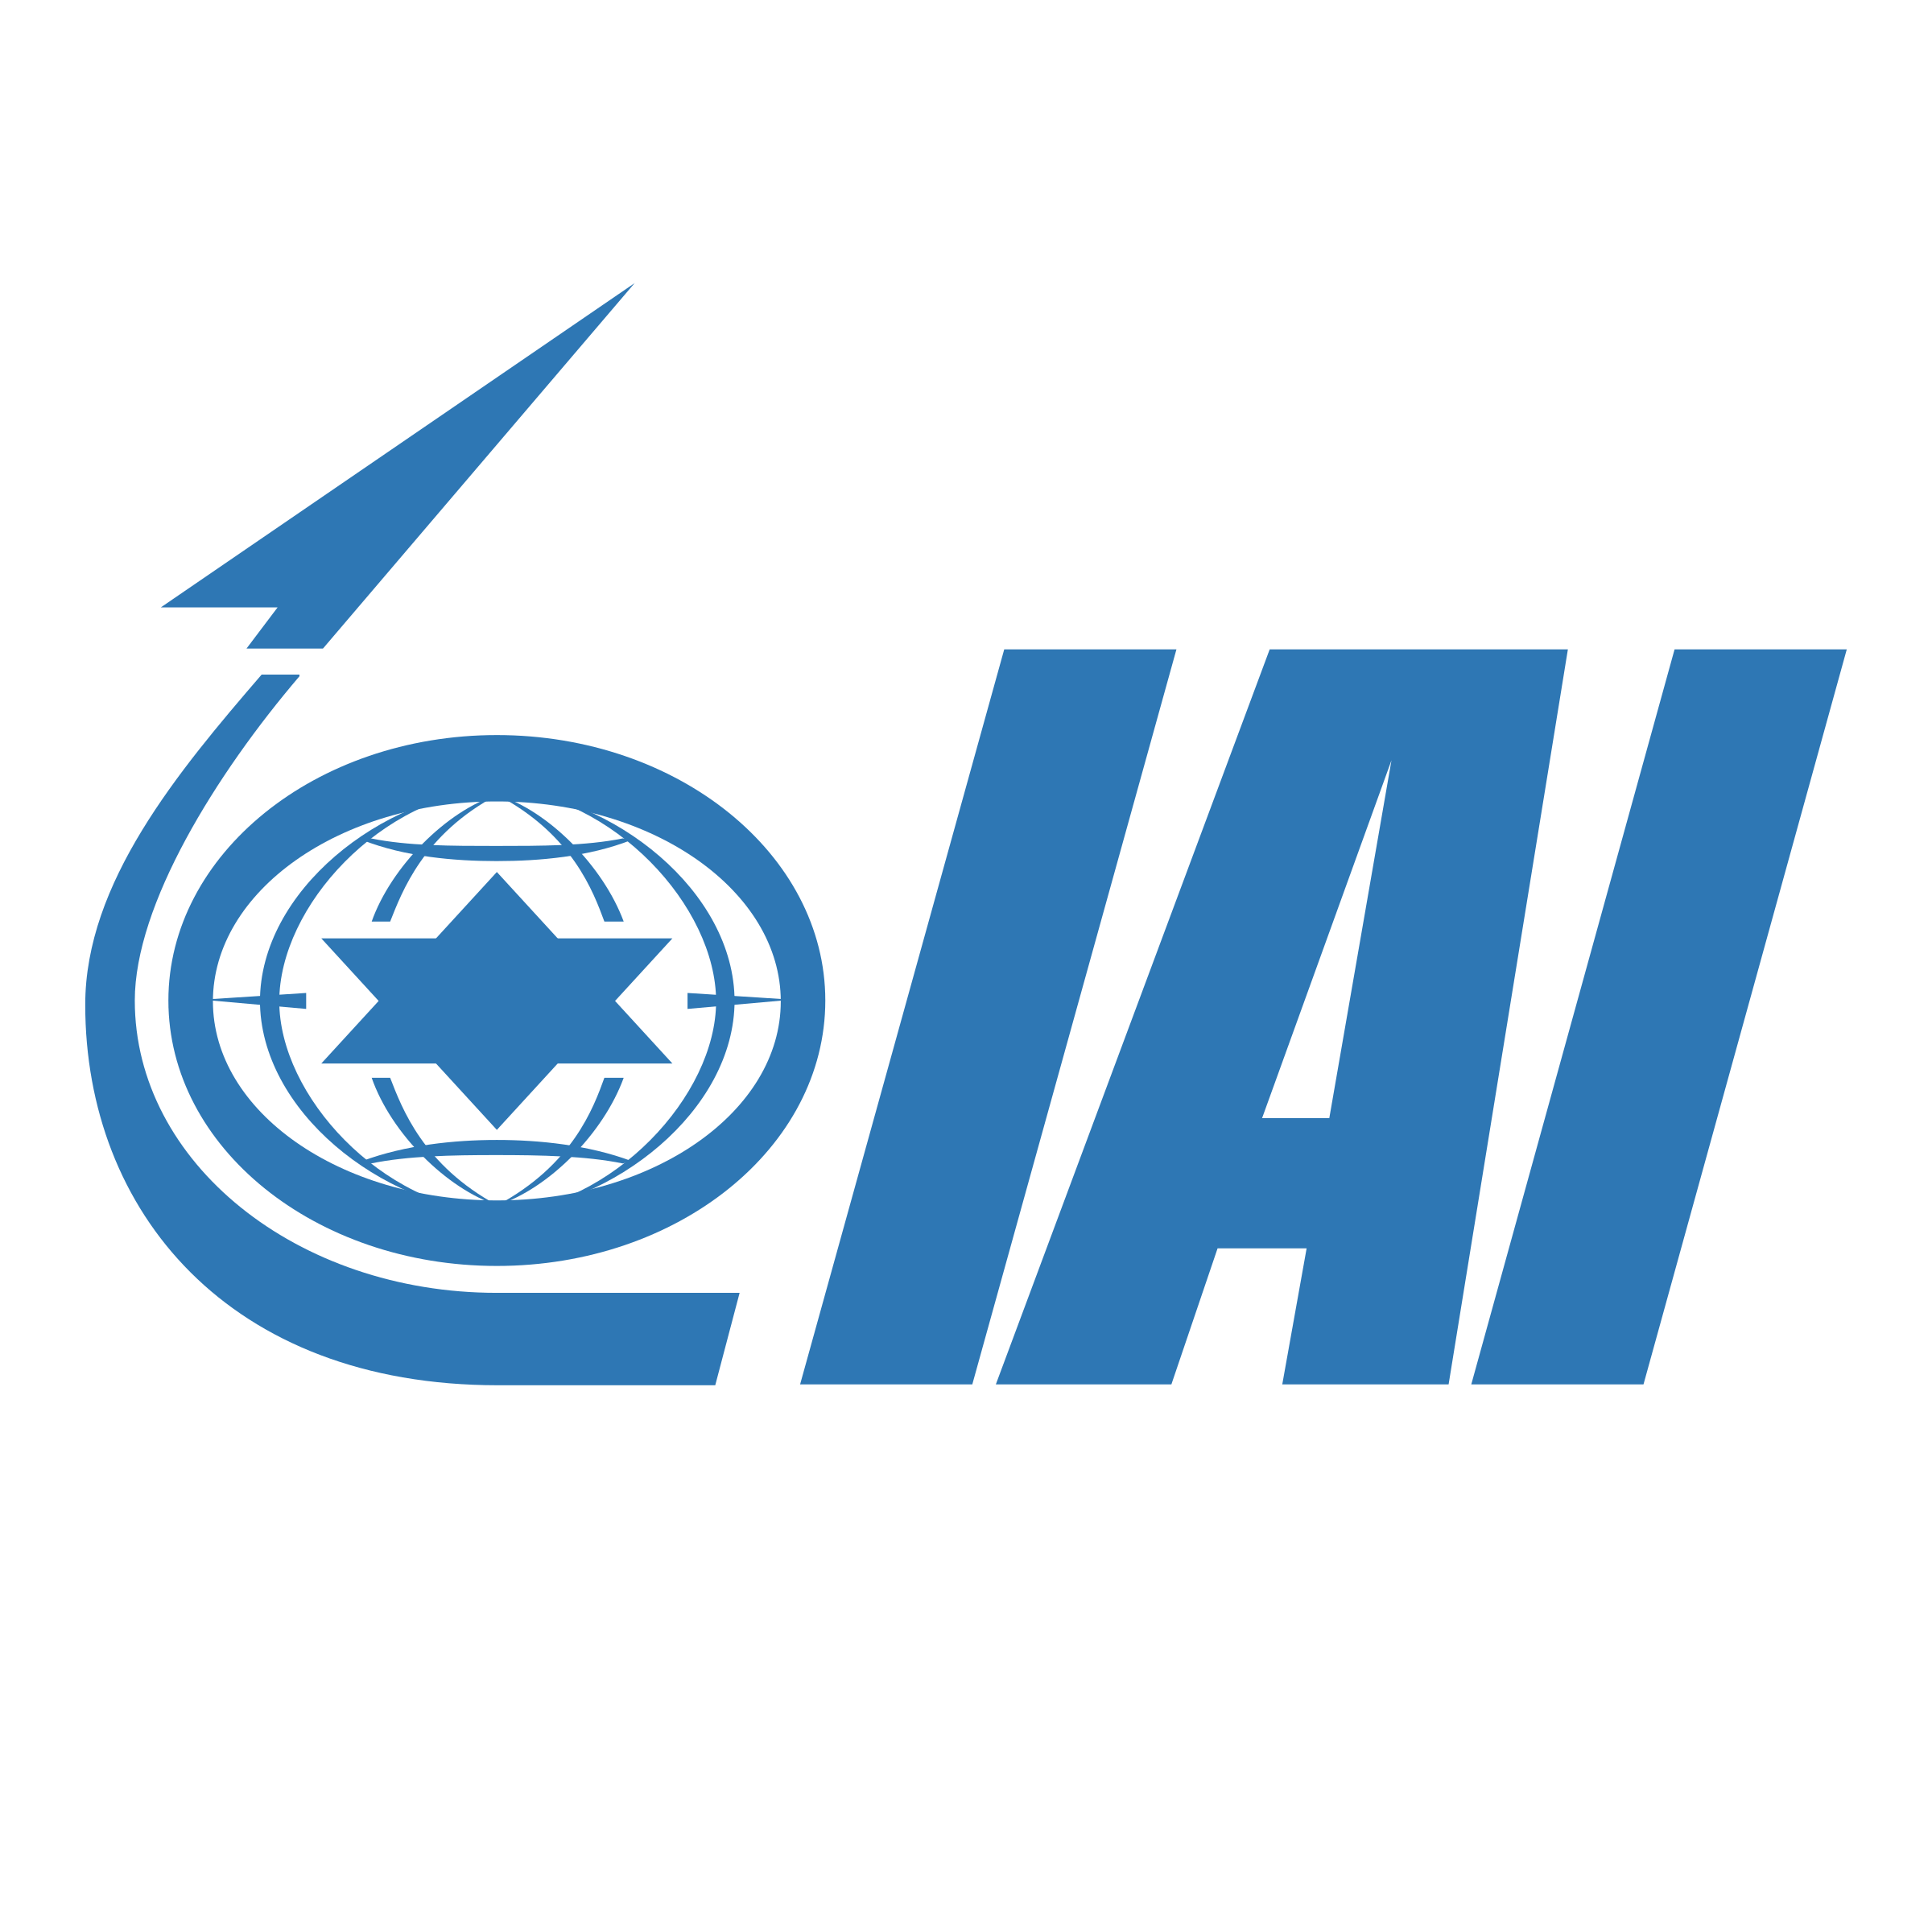 IAI Logo - IAI Logo PNG Transparent & SVG Vector - Freebie Supply